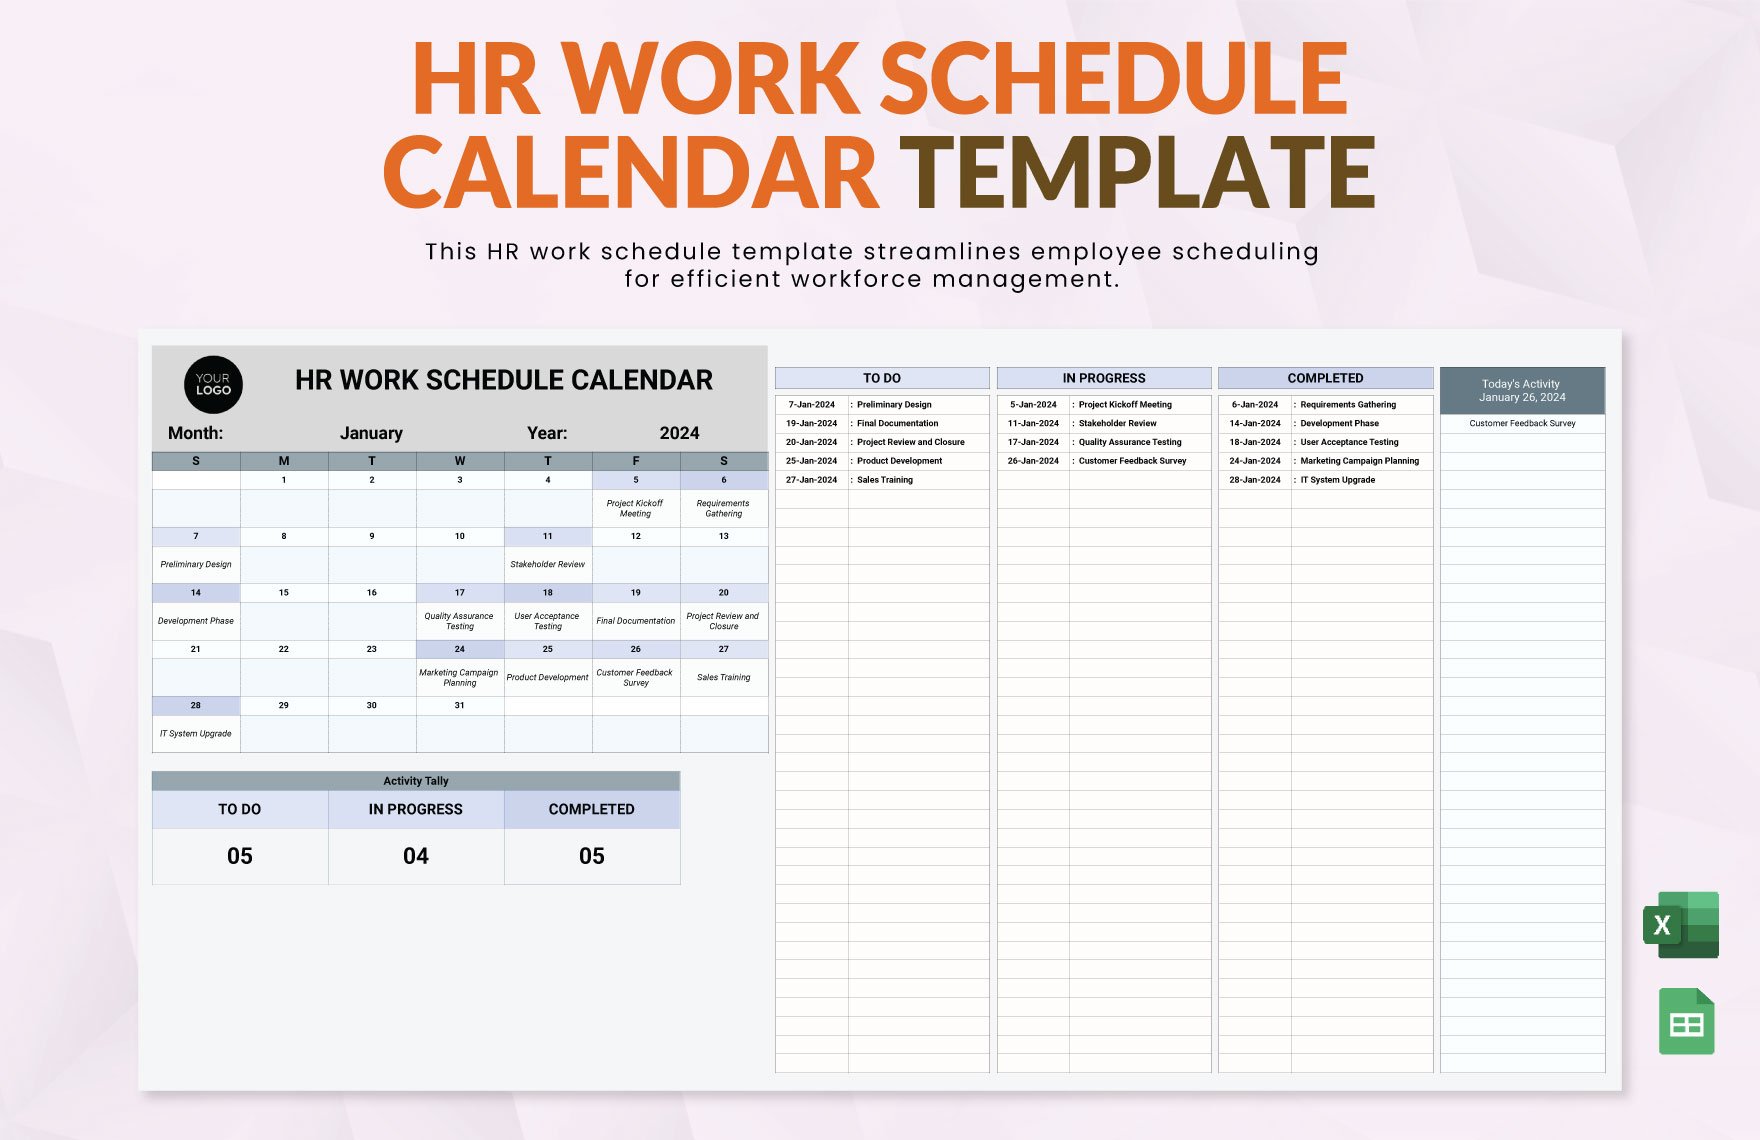 HR Work Schedule Calendar Template